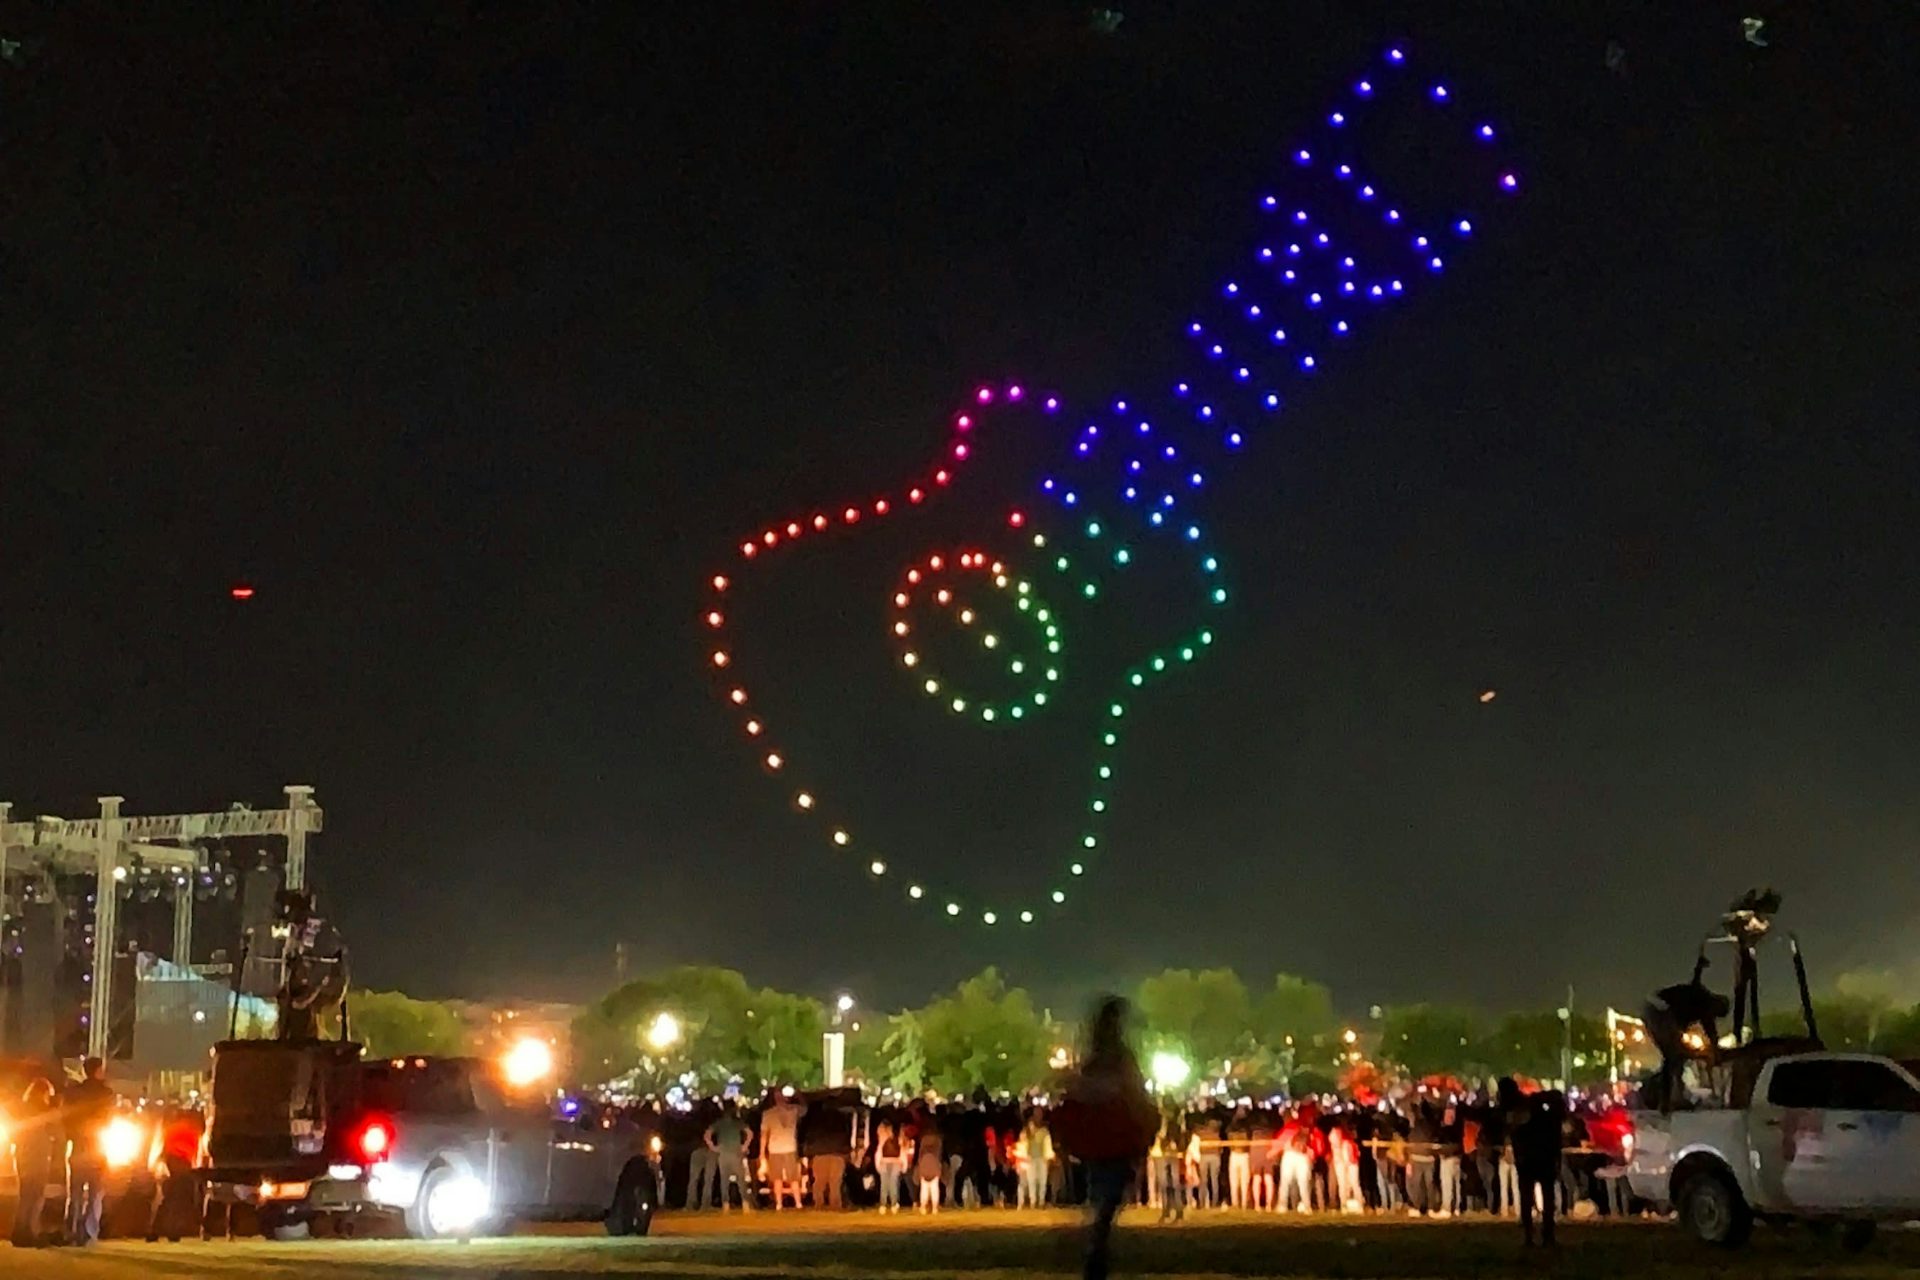 Verge Aero flies a guitar made of light show drones in Leon, Mexico at Festival Internacional del Globo in 2019